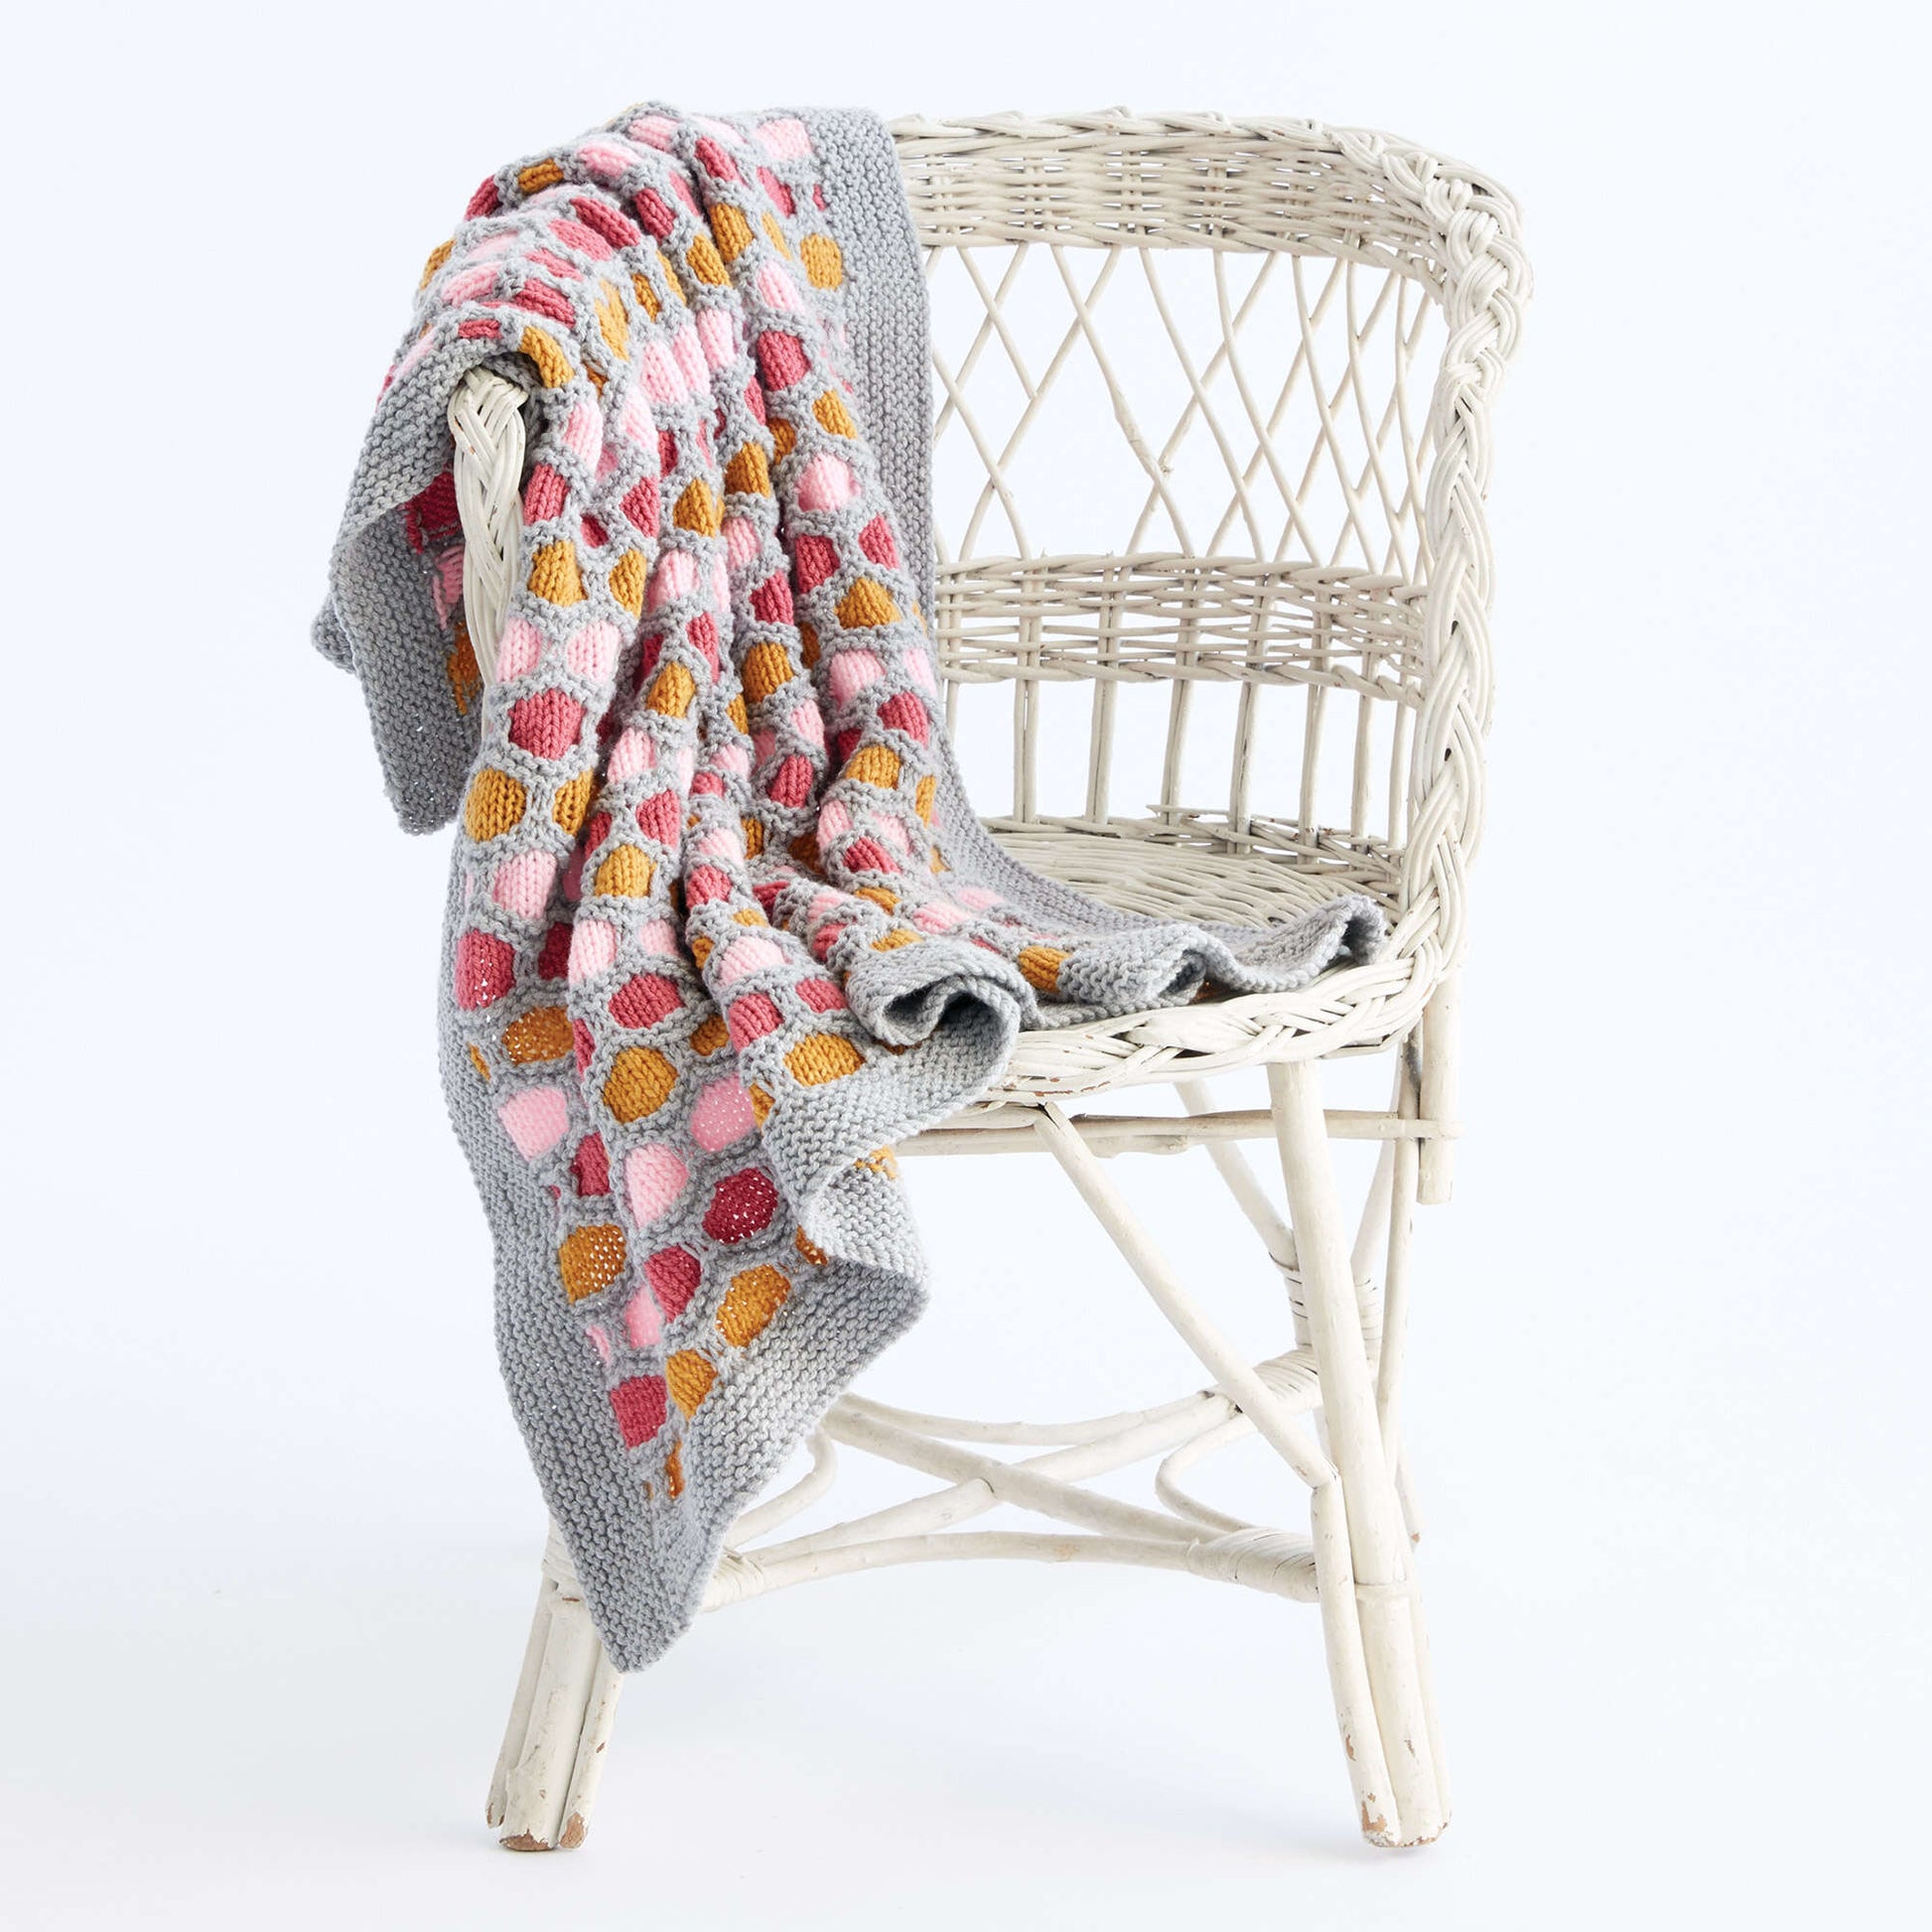 Free Caron Honeycomb Stripes Knit Blanket Pattern